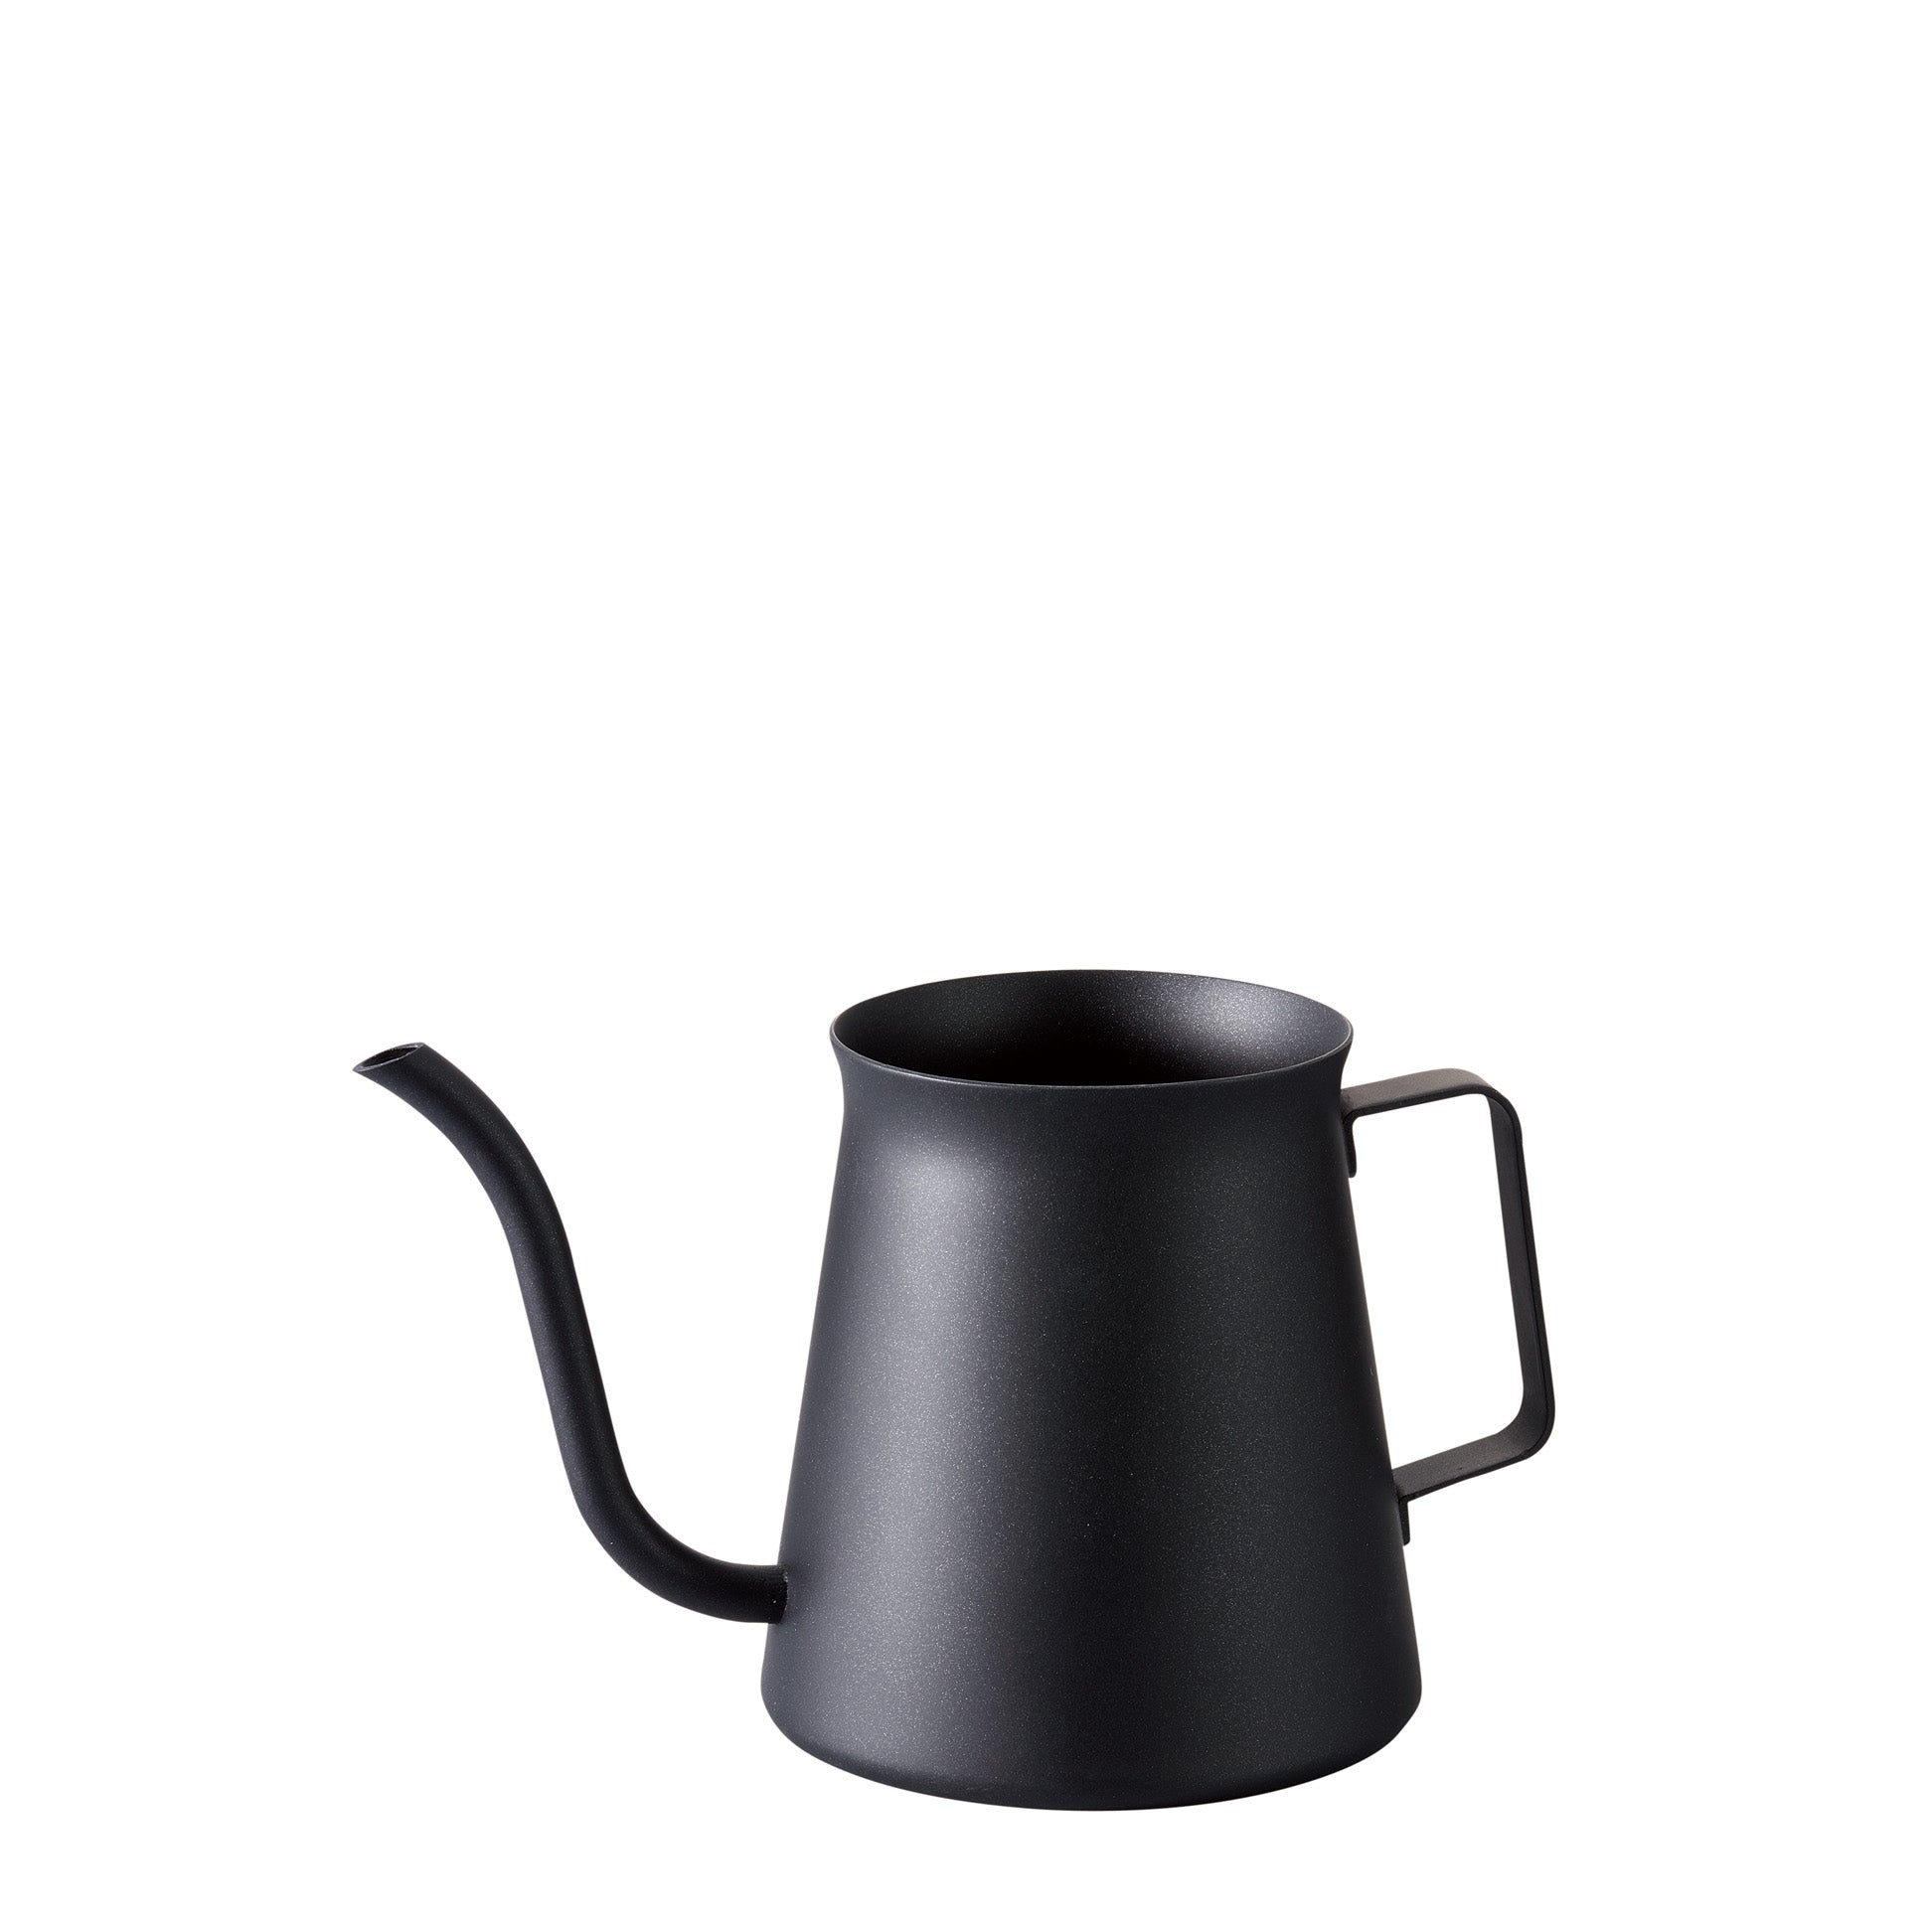 Drip kettle "kasuya" model 500ml